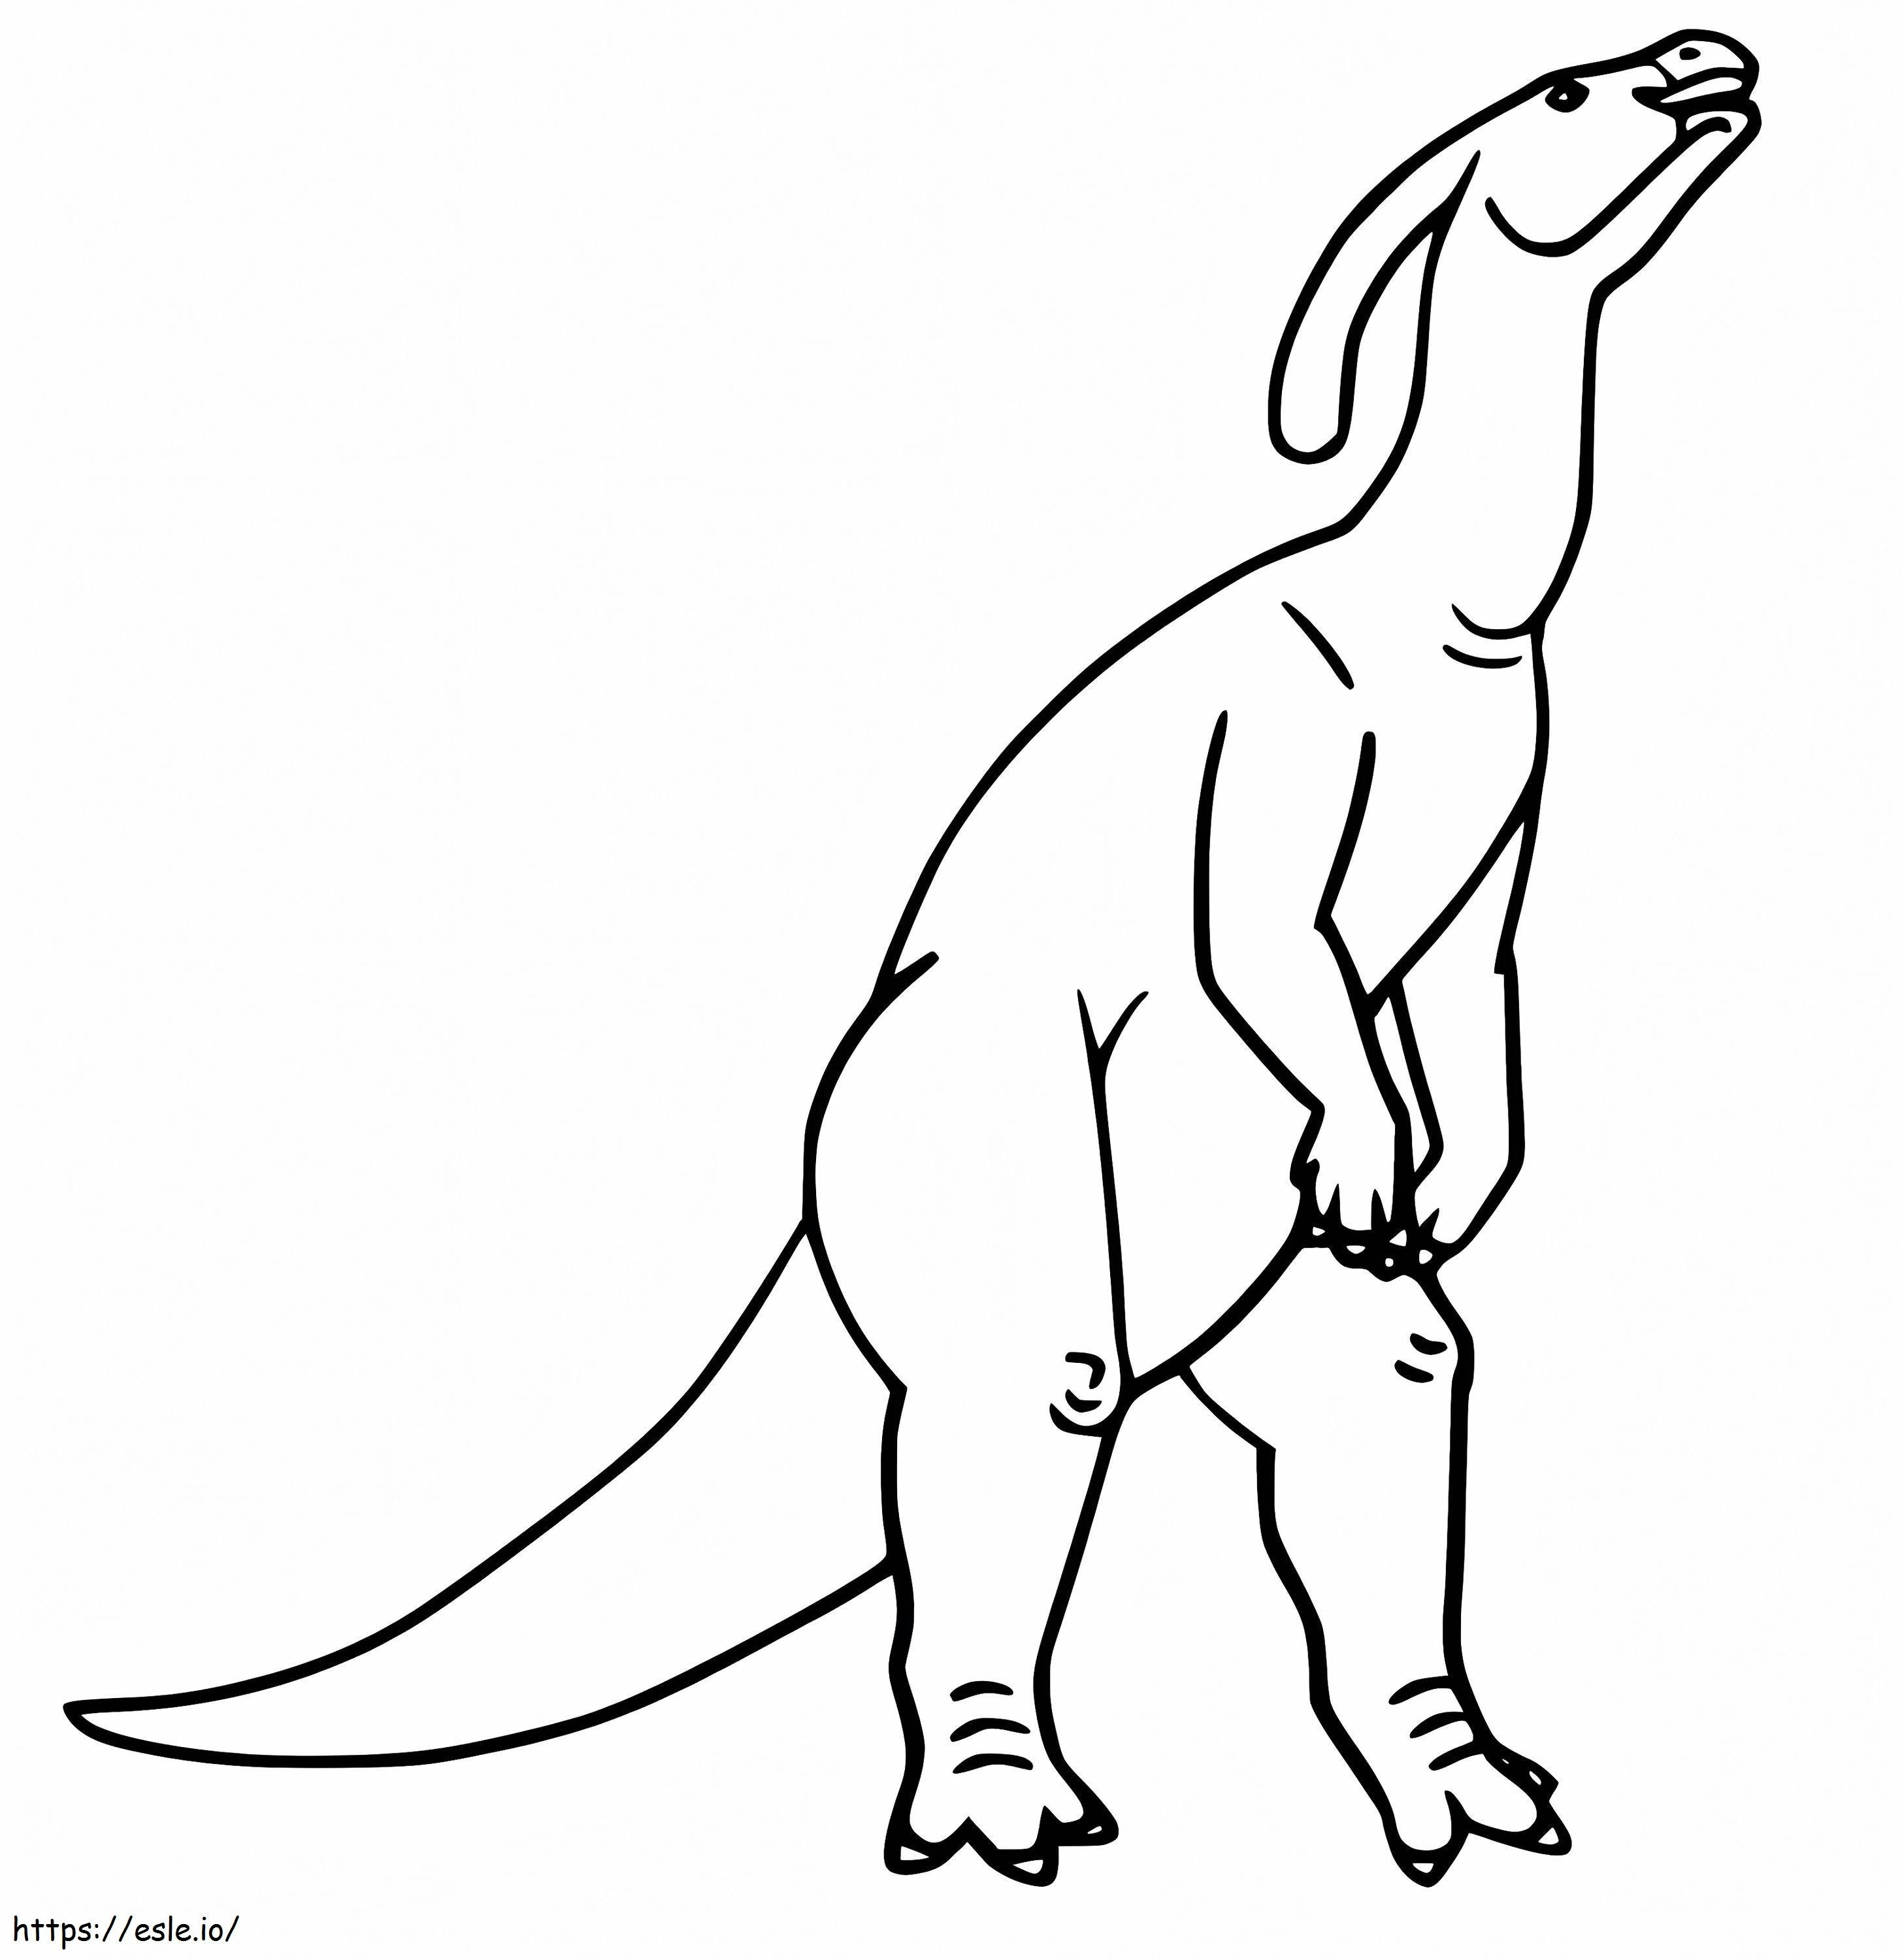 Parasaurolophus 1 ausmalbilder